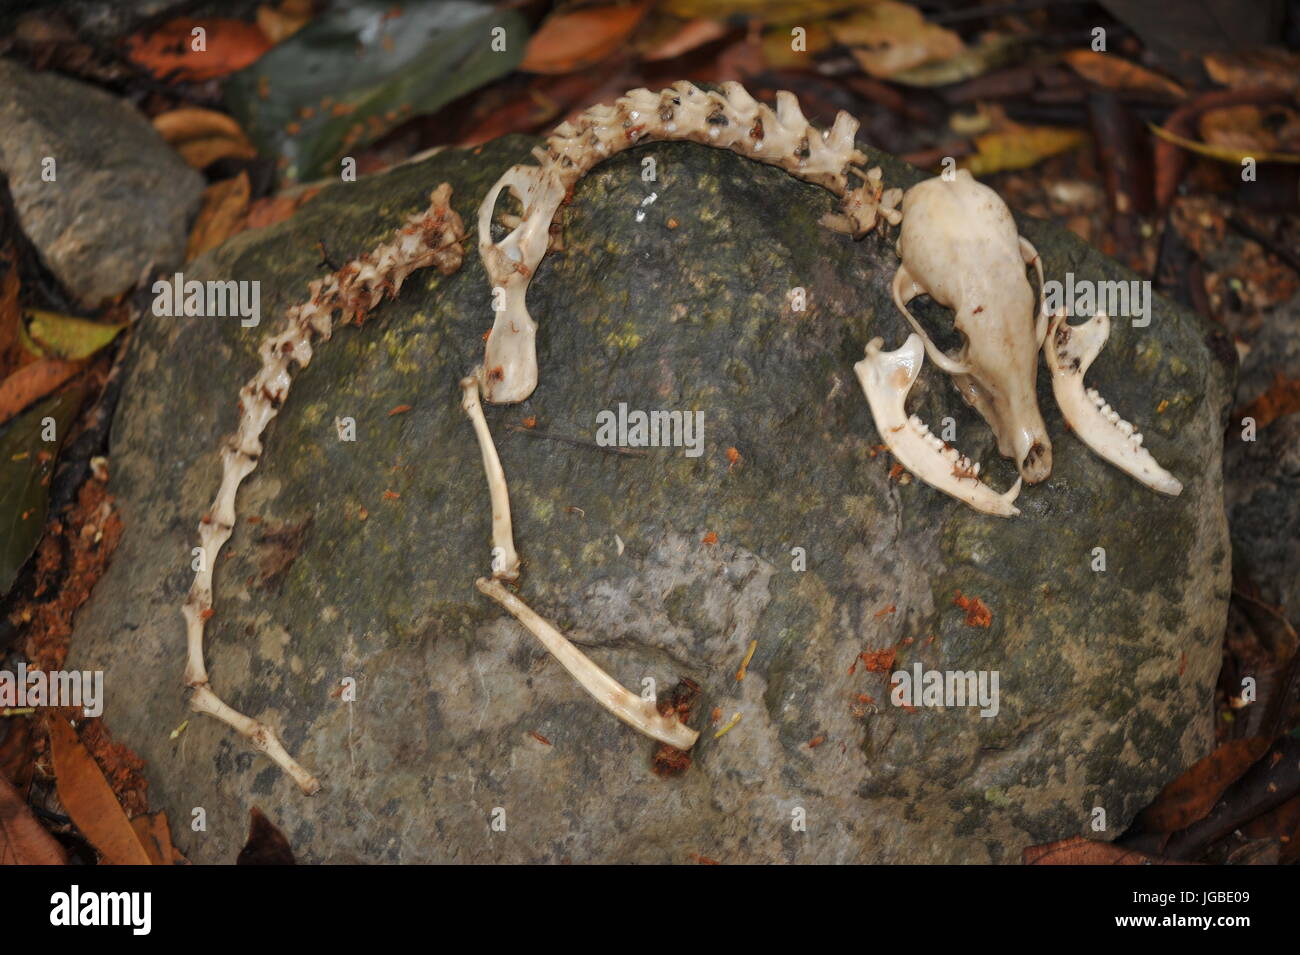 Small animal skeleton remains displayed on rock Stock Photo